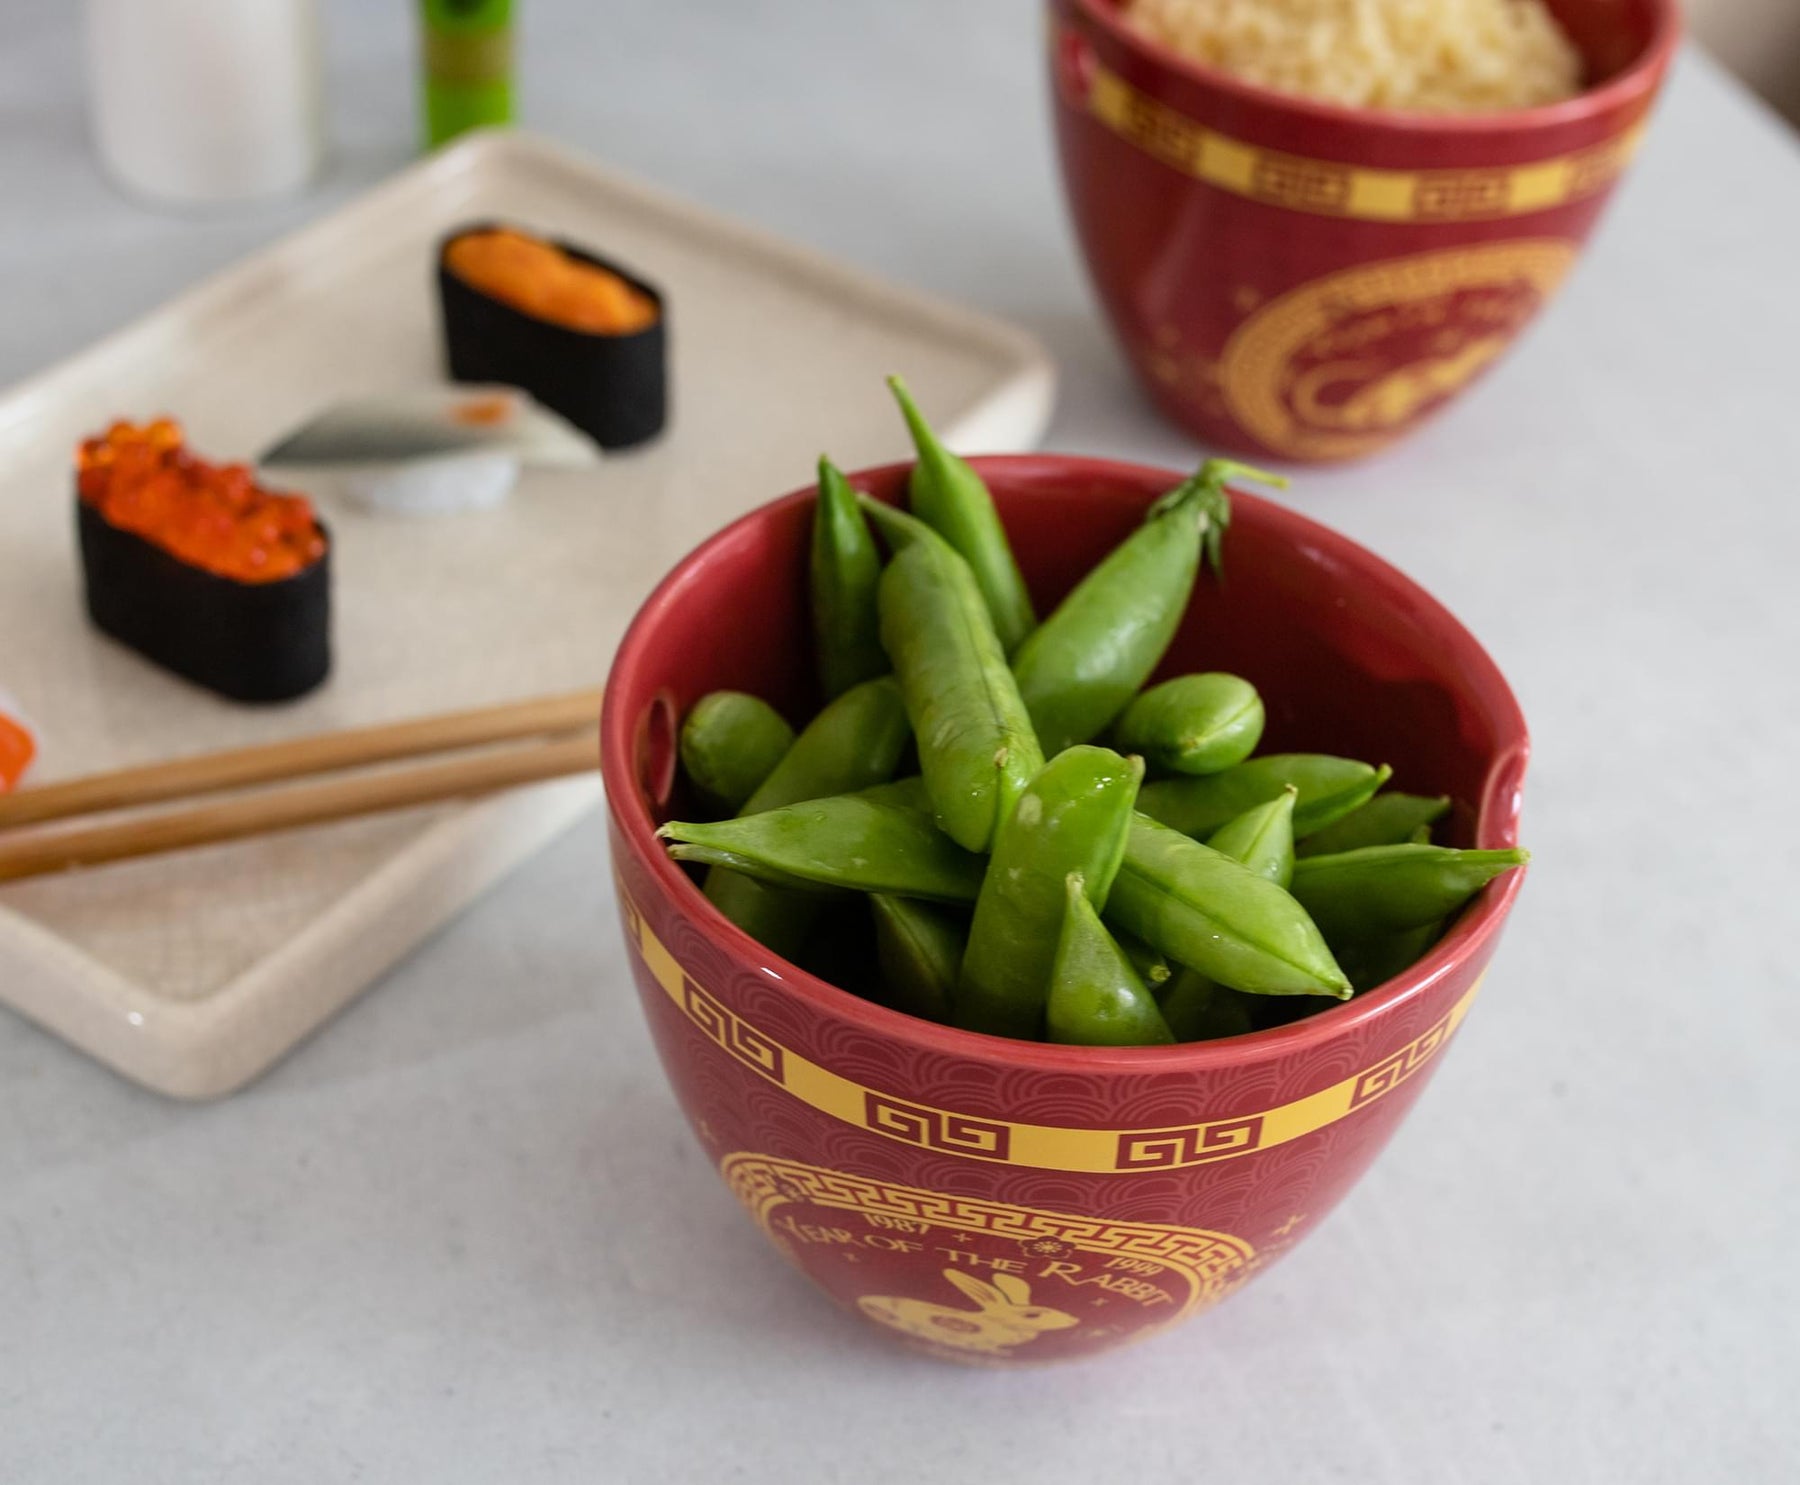 Year Of The Rabbit Chinese Zodiac 16-Ounce Ramen Bowl and Chopstick Set